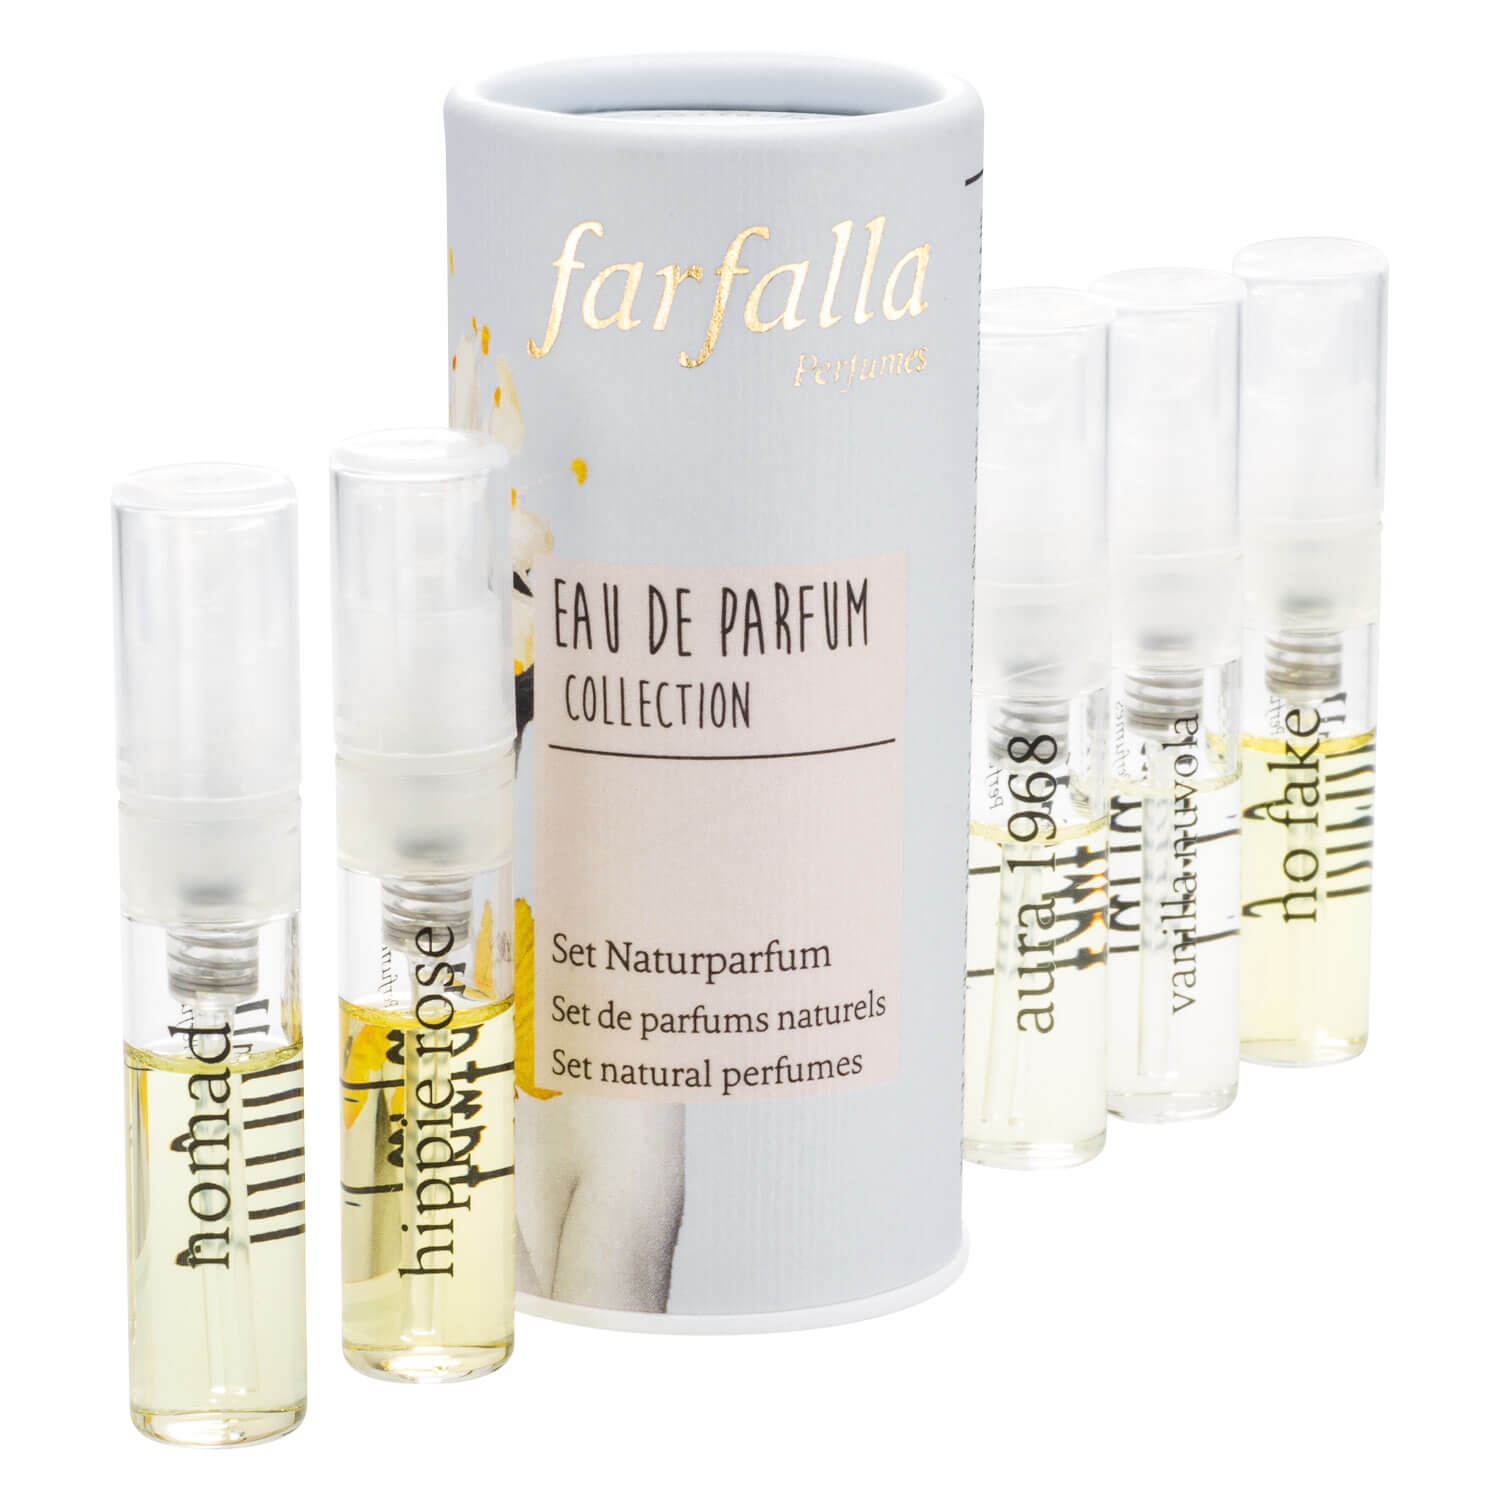 Product image from Farfalla Fragrance - Eau de Parfum Collection